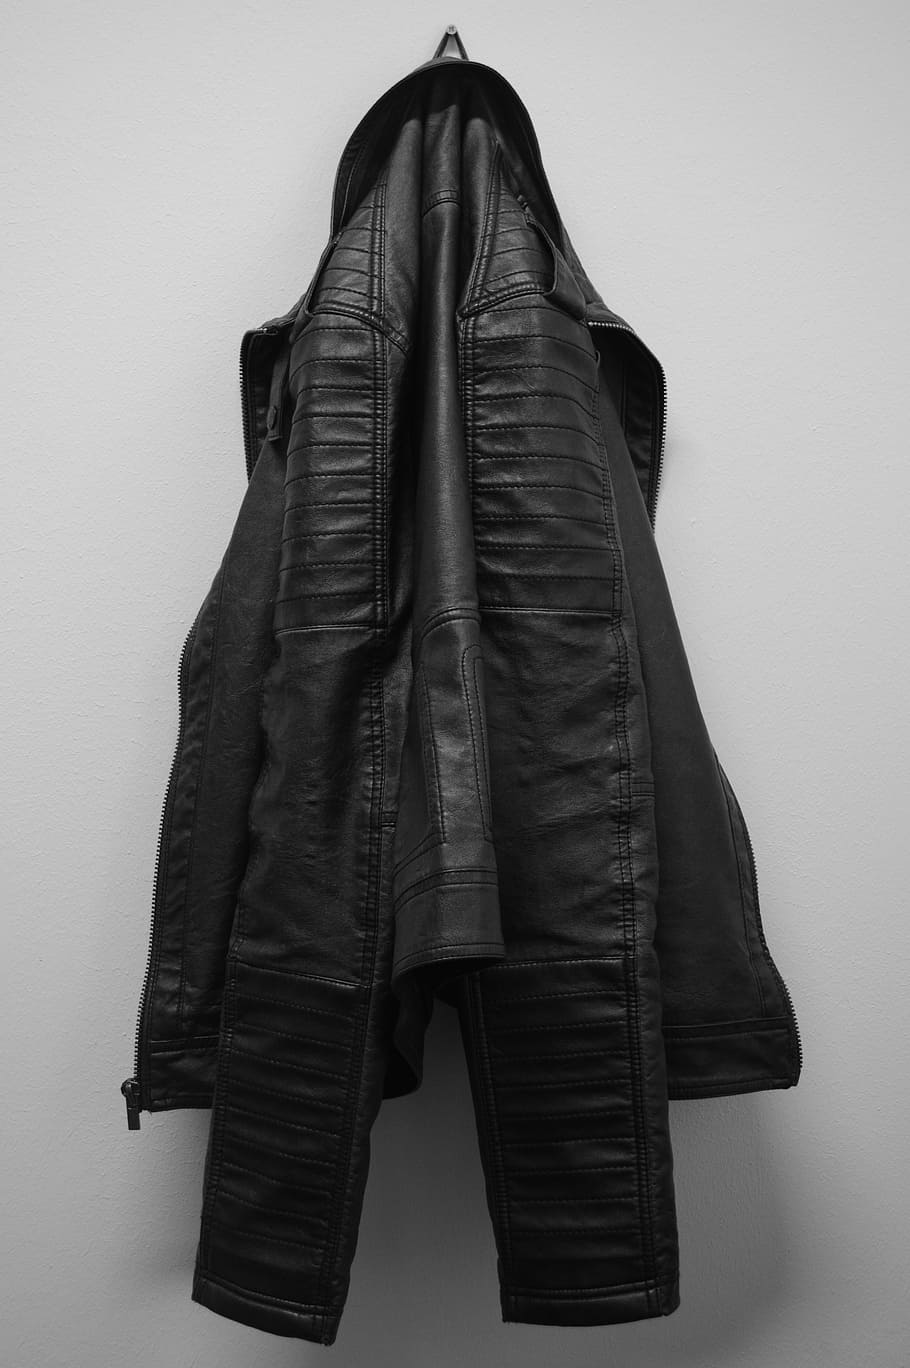 preto, jaqueta de couro, suspensão, branco, parede, jaqueta, casaco de couro, roupas, cabide, preto branco